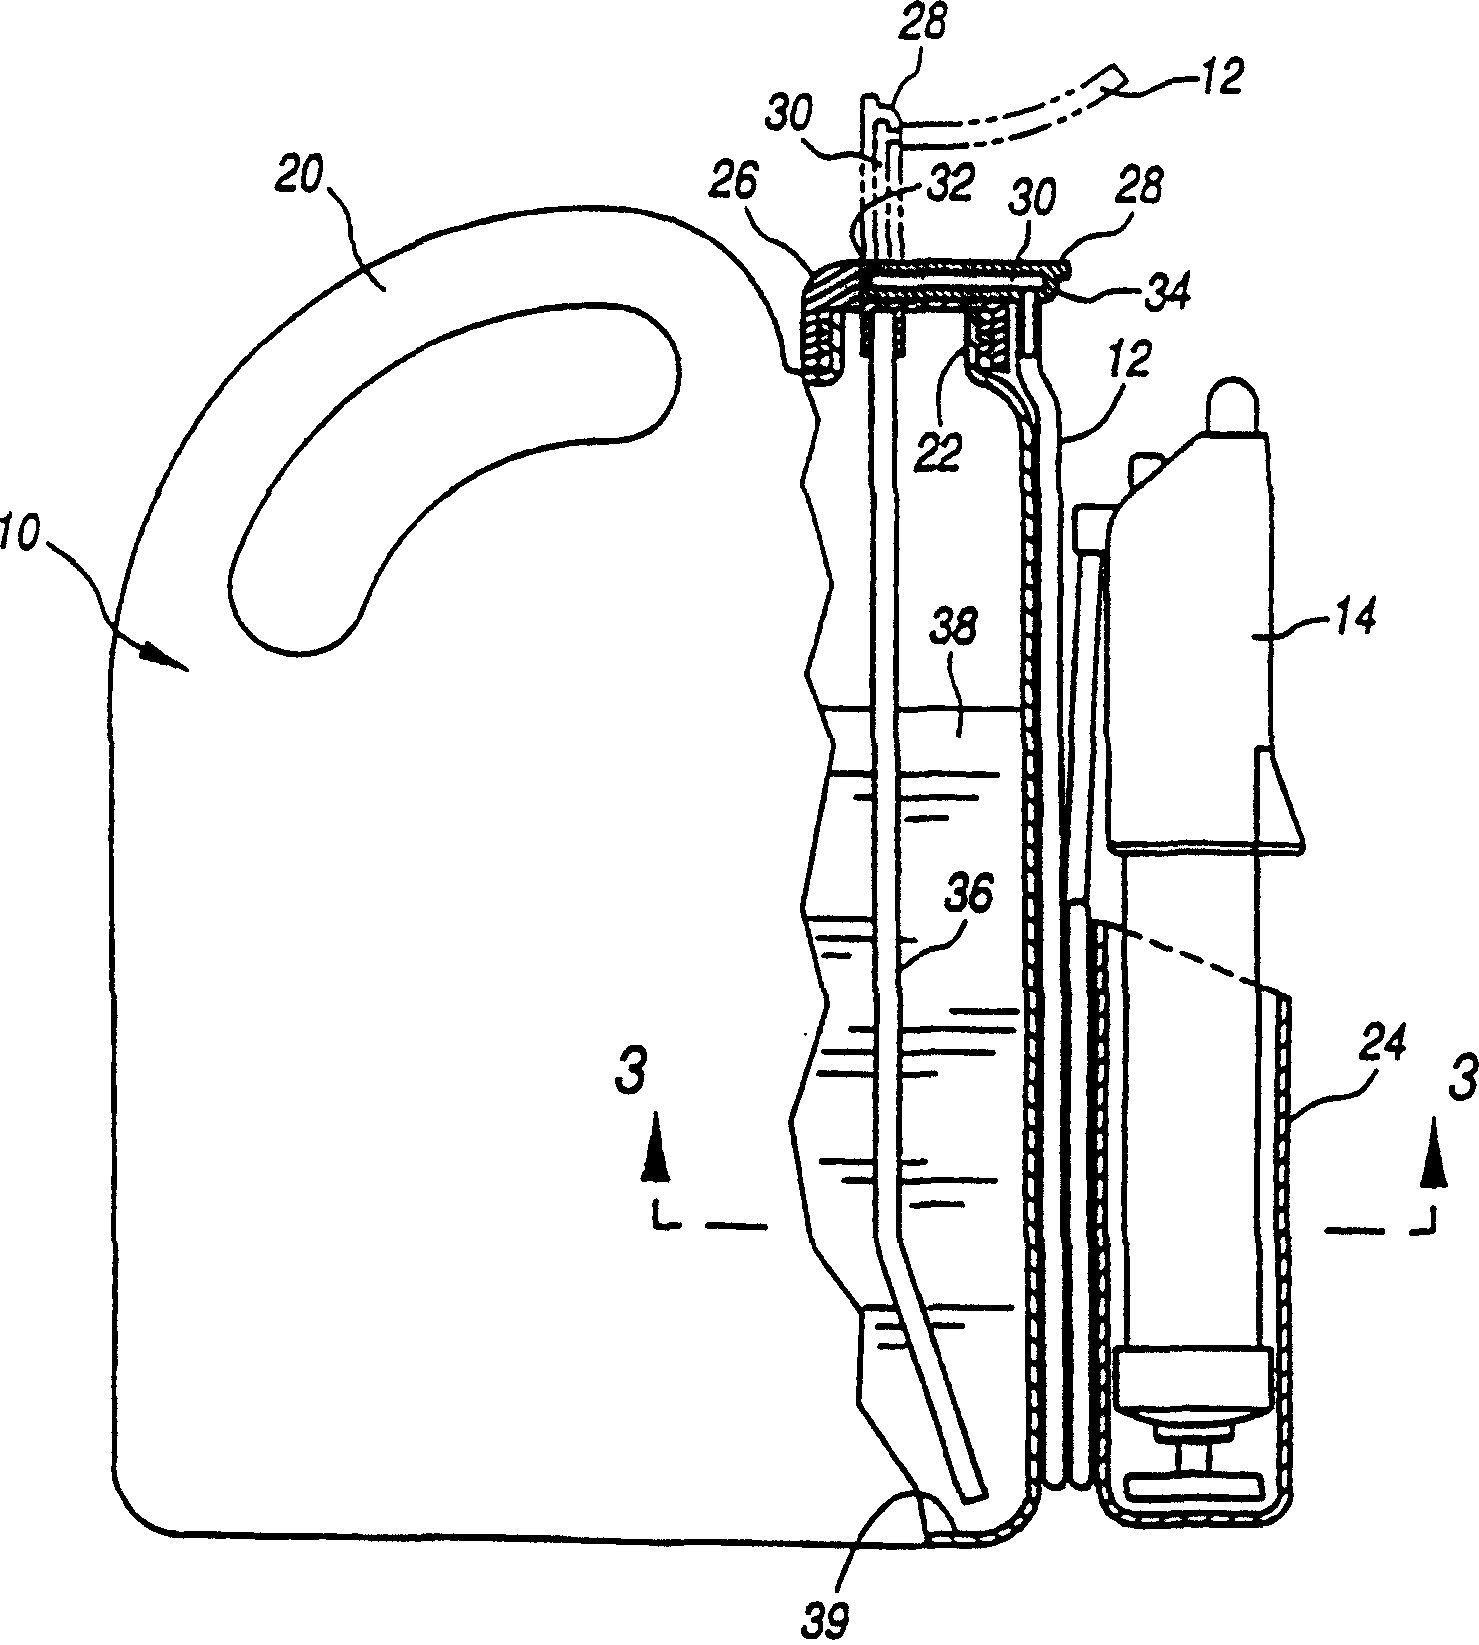 Hand holdable pump spray apparatus